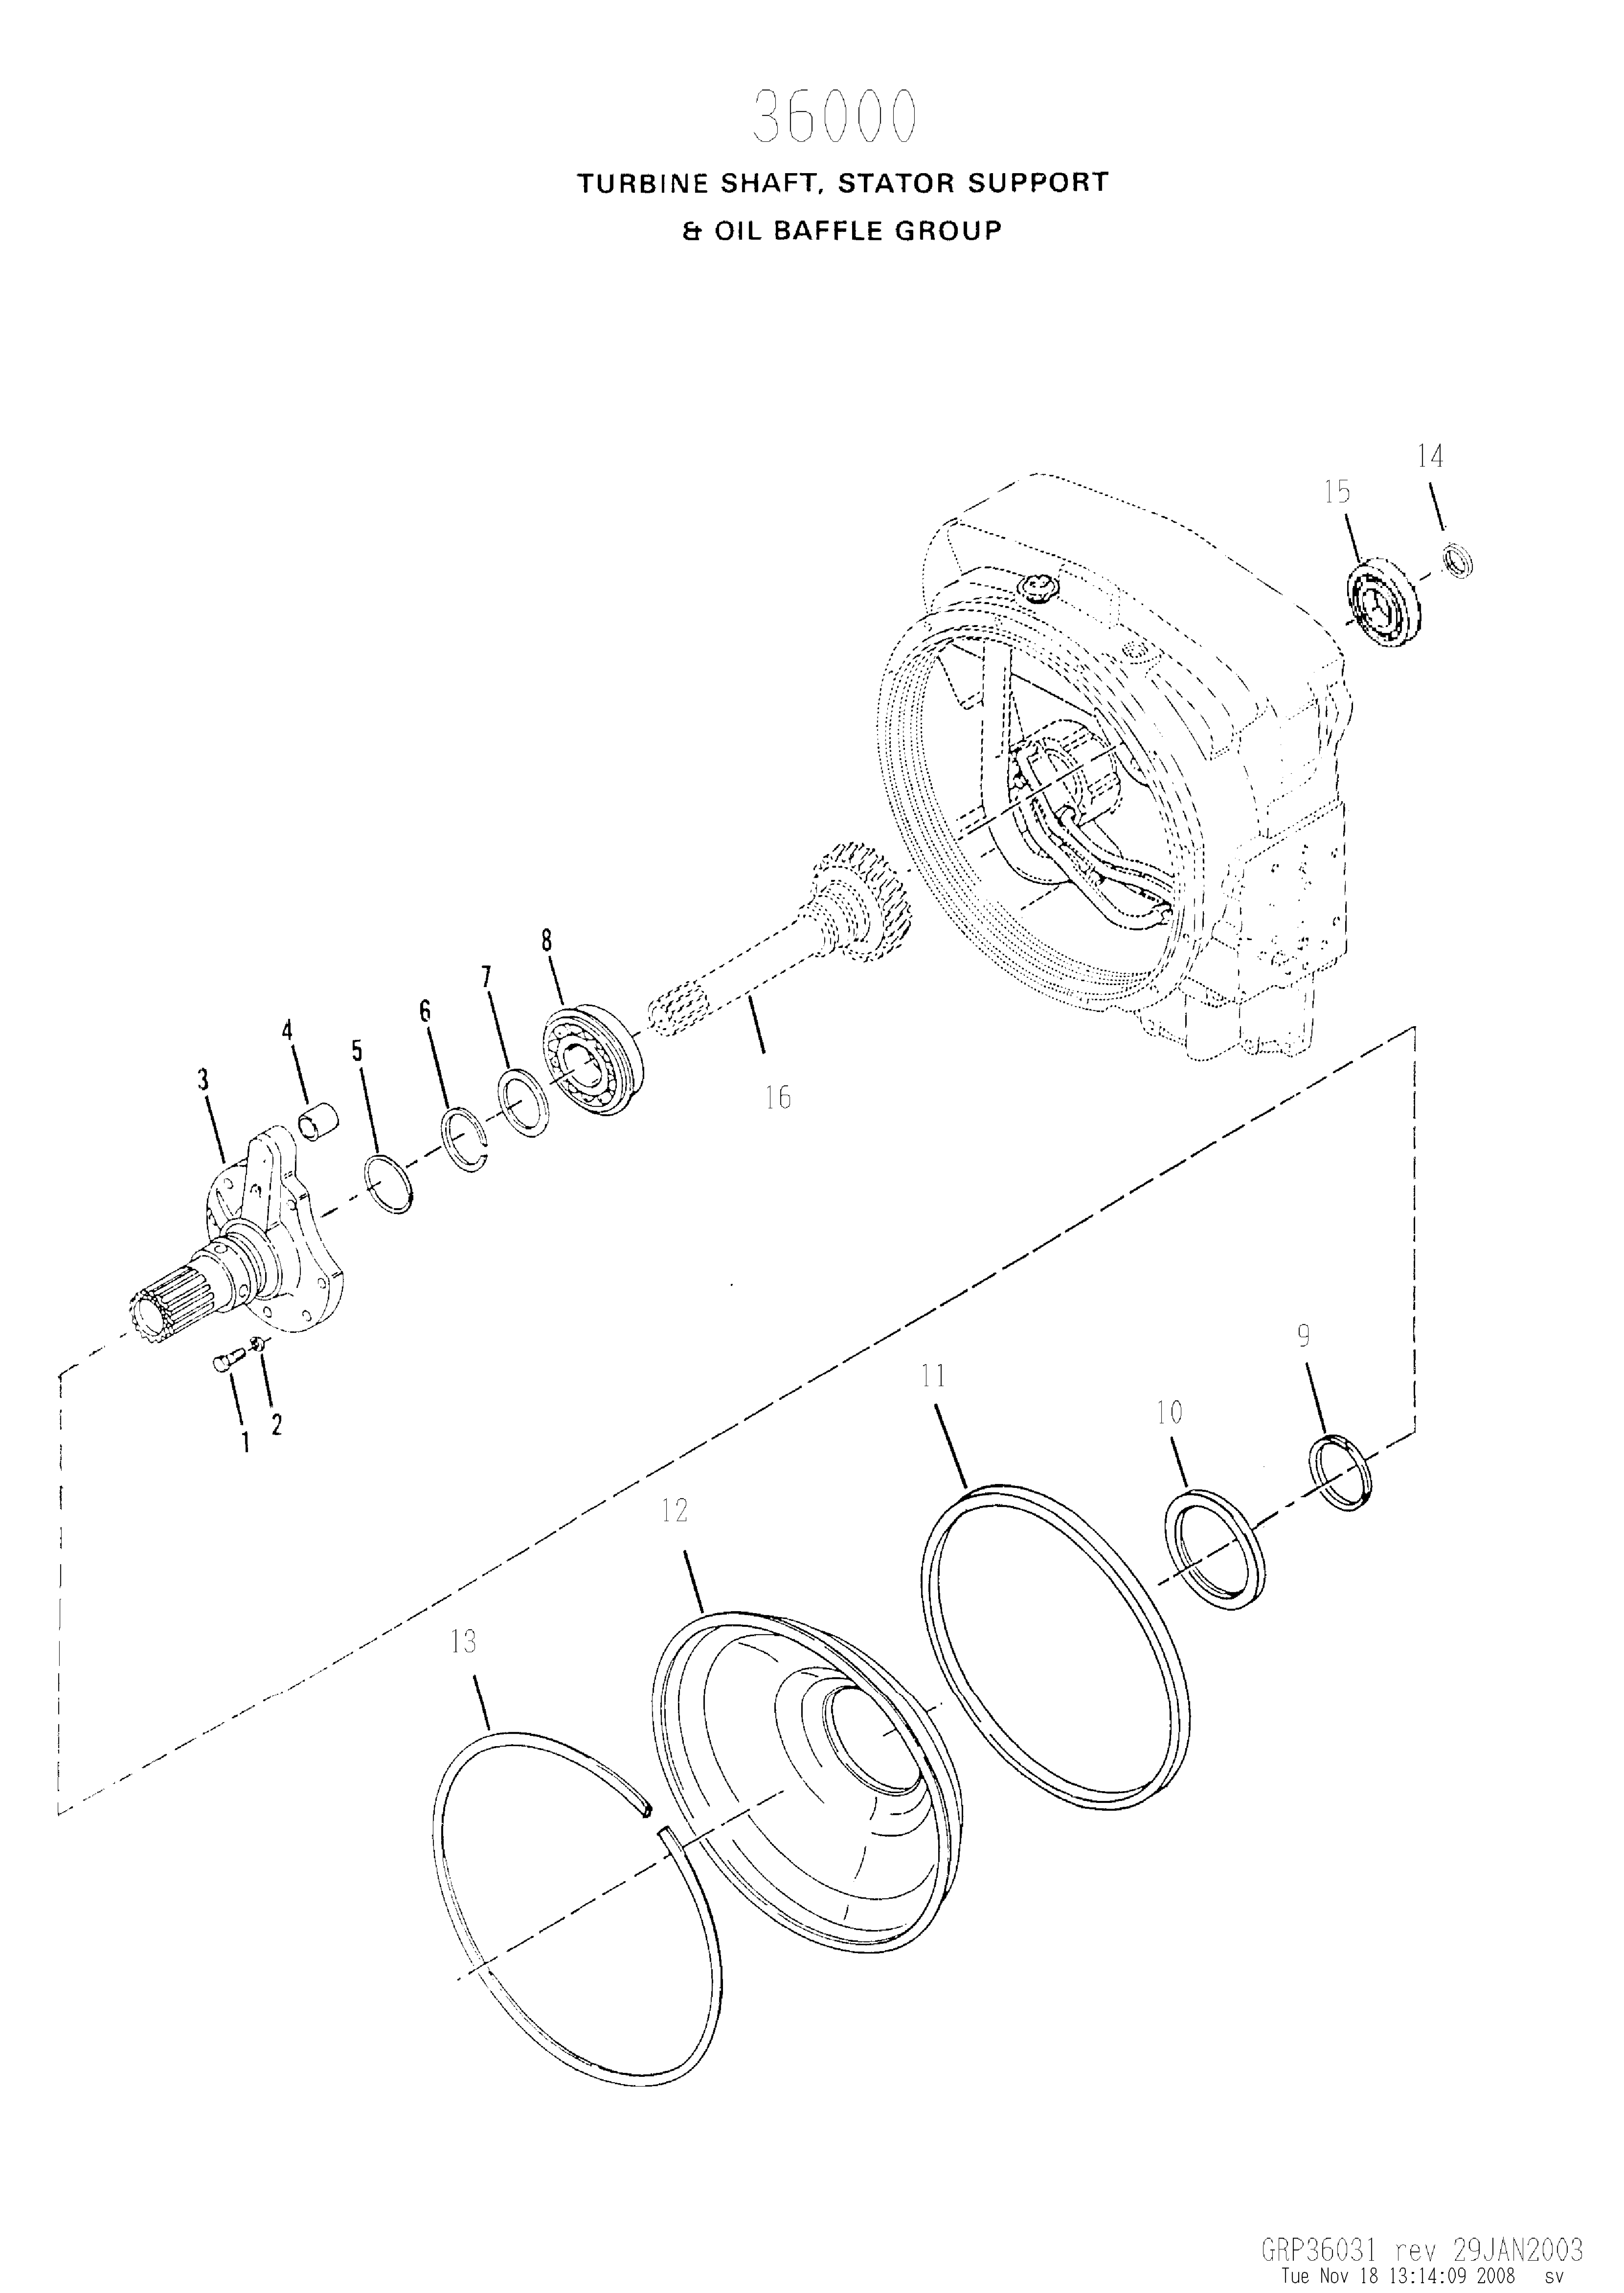 drawing for SCHOEMA, SCHOETTLER MASCHINENFABRIK K24.000287 - RING-PISTON (figure 1)